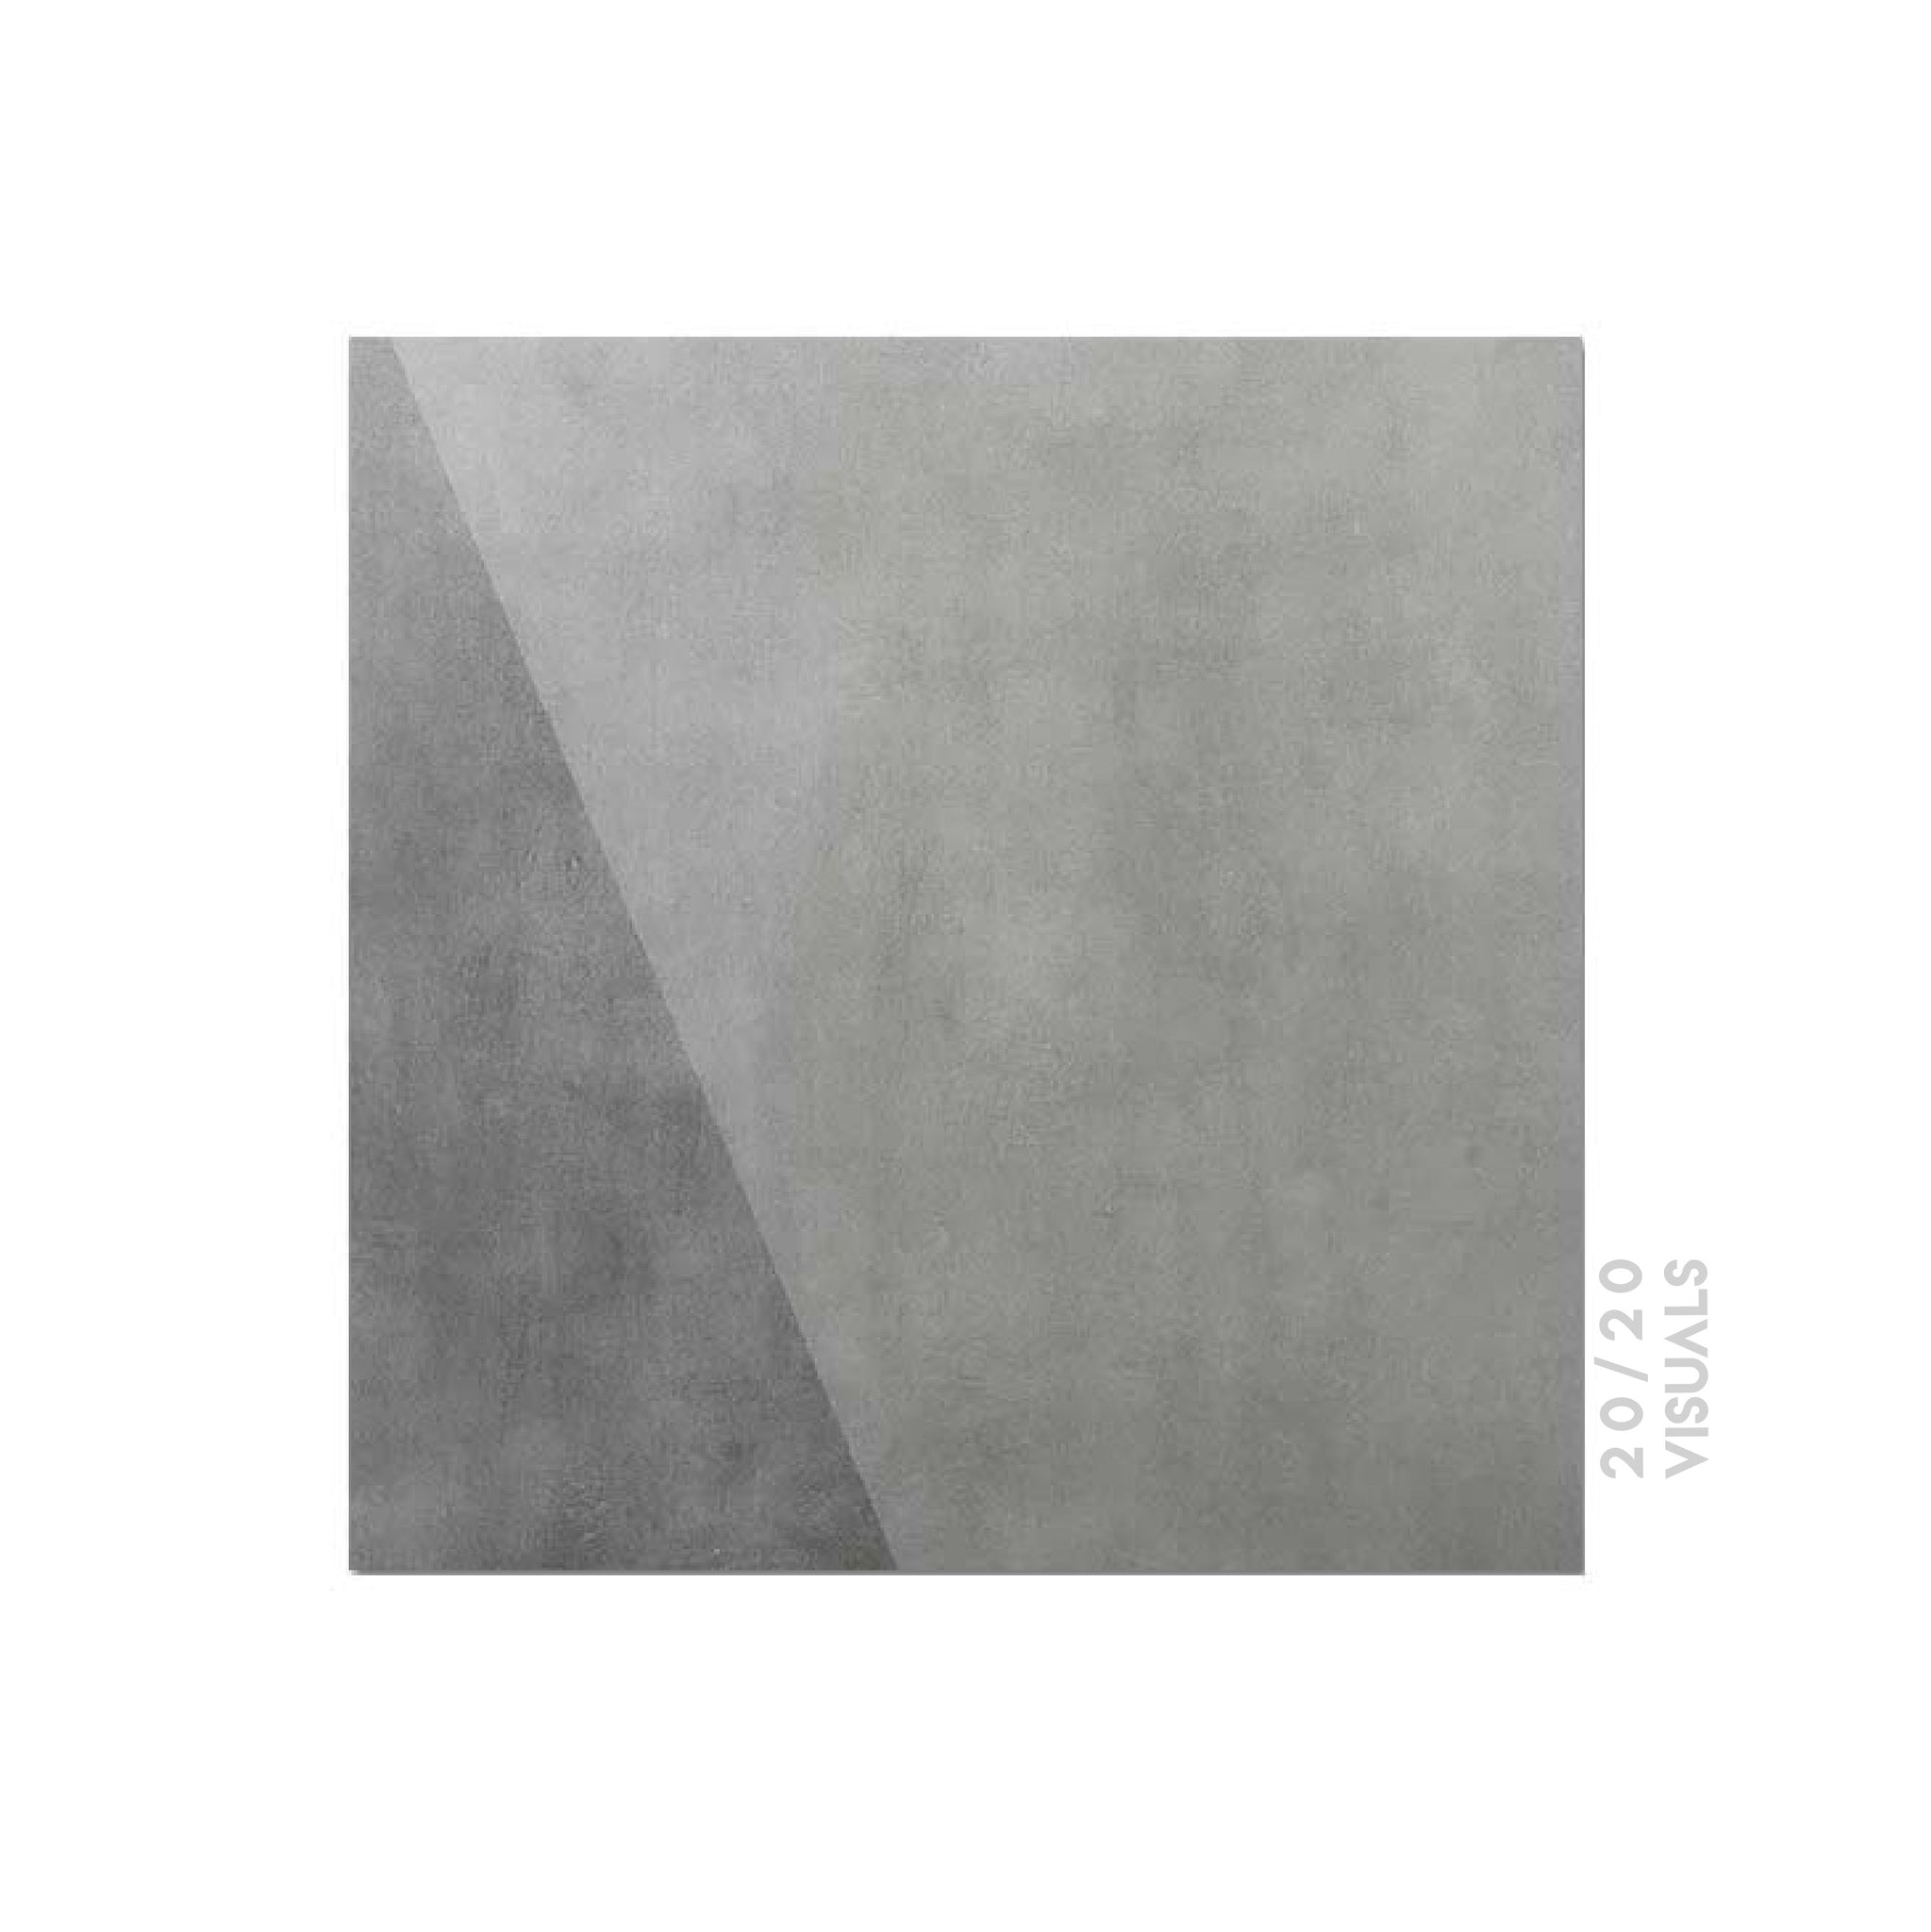 60X60 Abstract Grey Tile